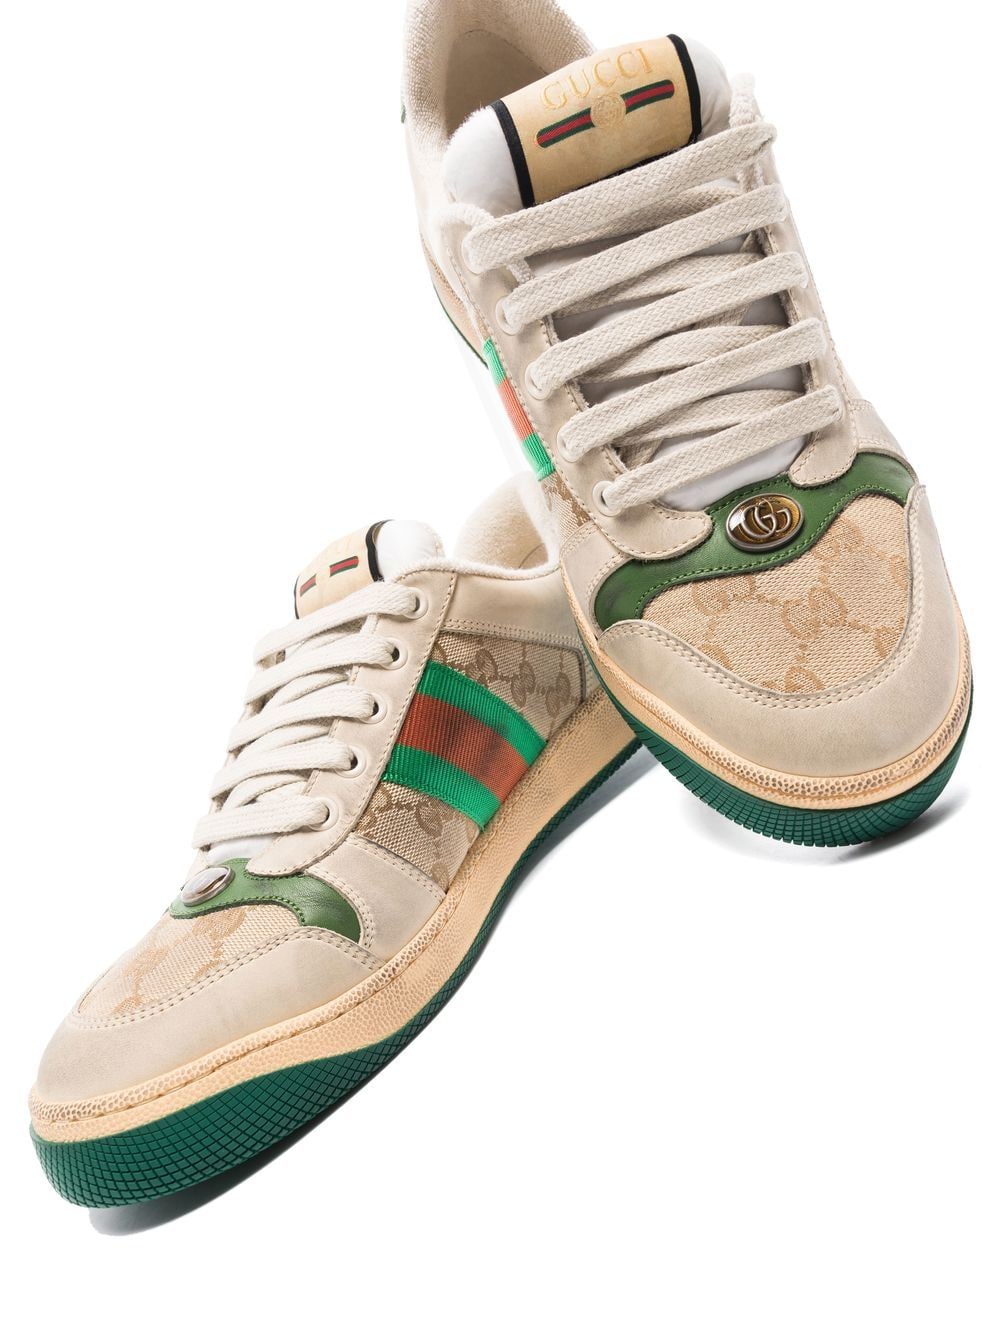 Gucci Screener sneakers - Beige